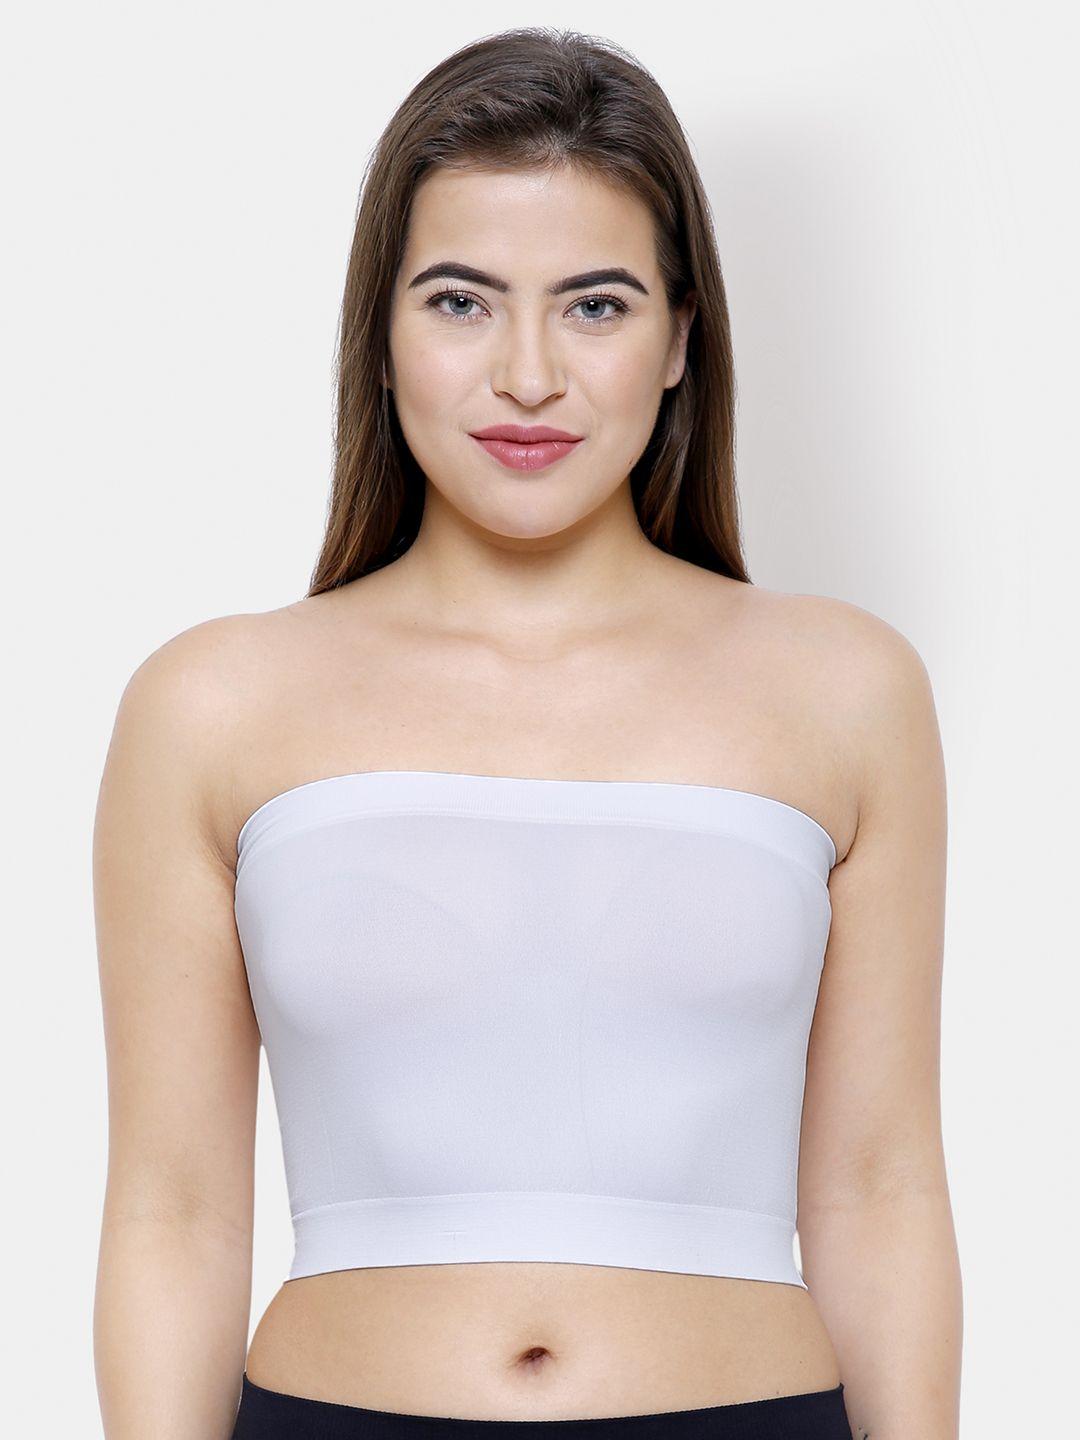 fashionrack women white solid strapless camisole 4018